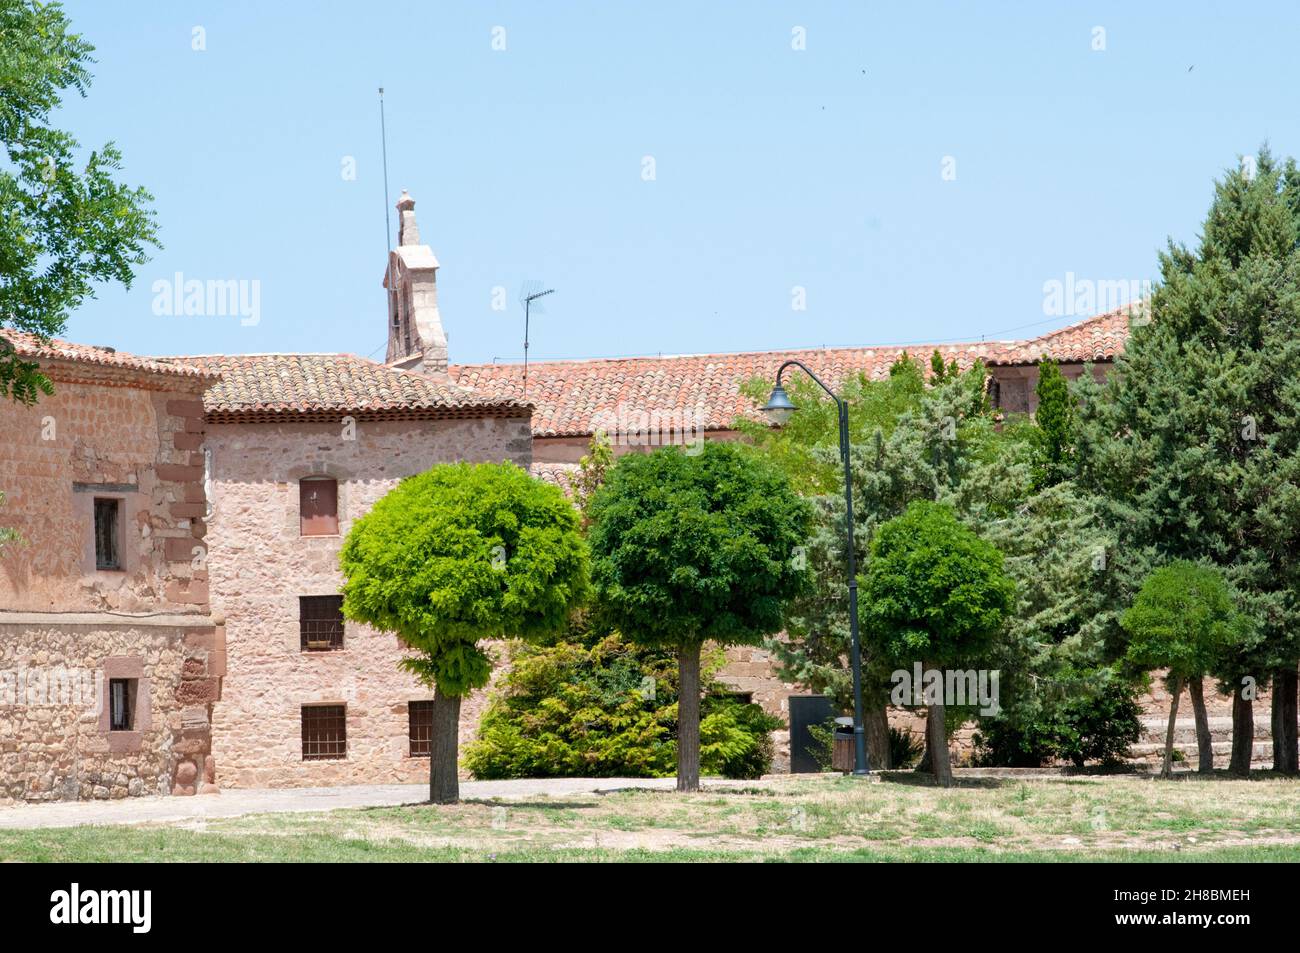 The old town of Medinaceli, Soria, in Castile and Leon, Spain. Stock Photo